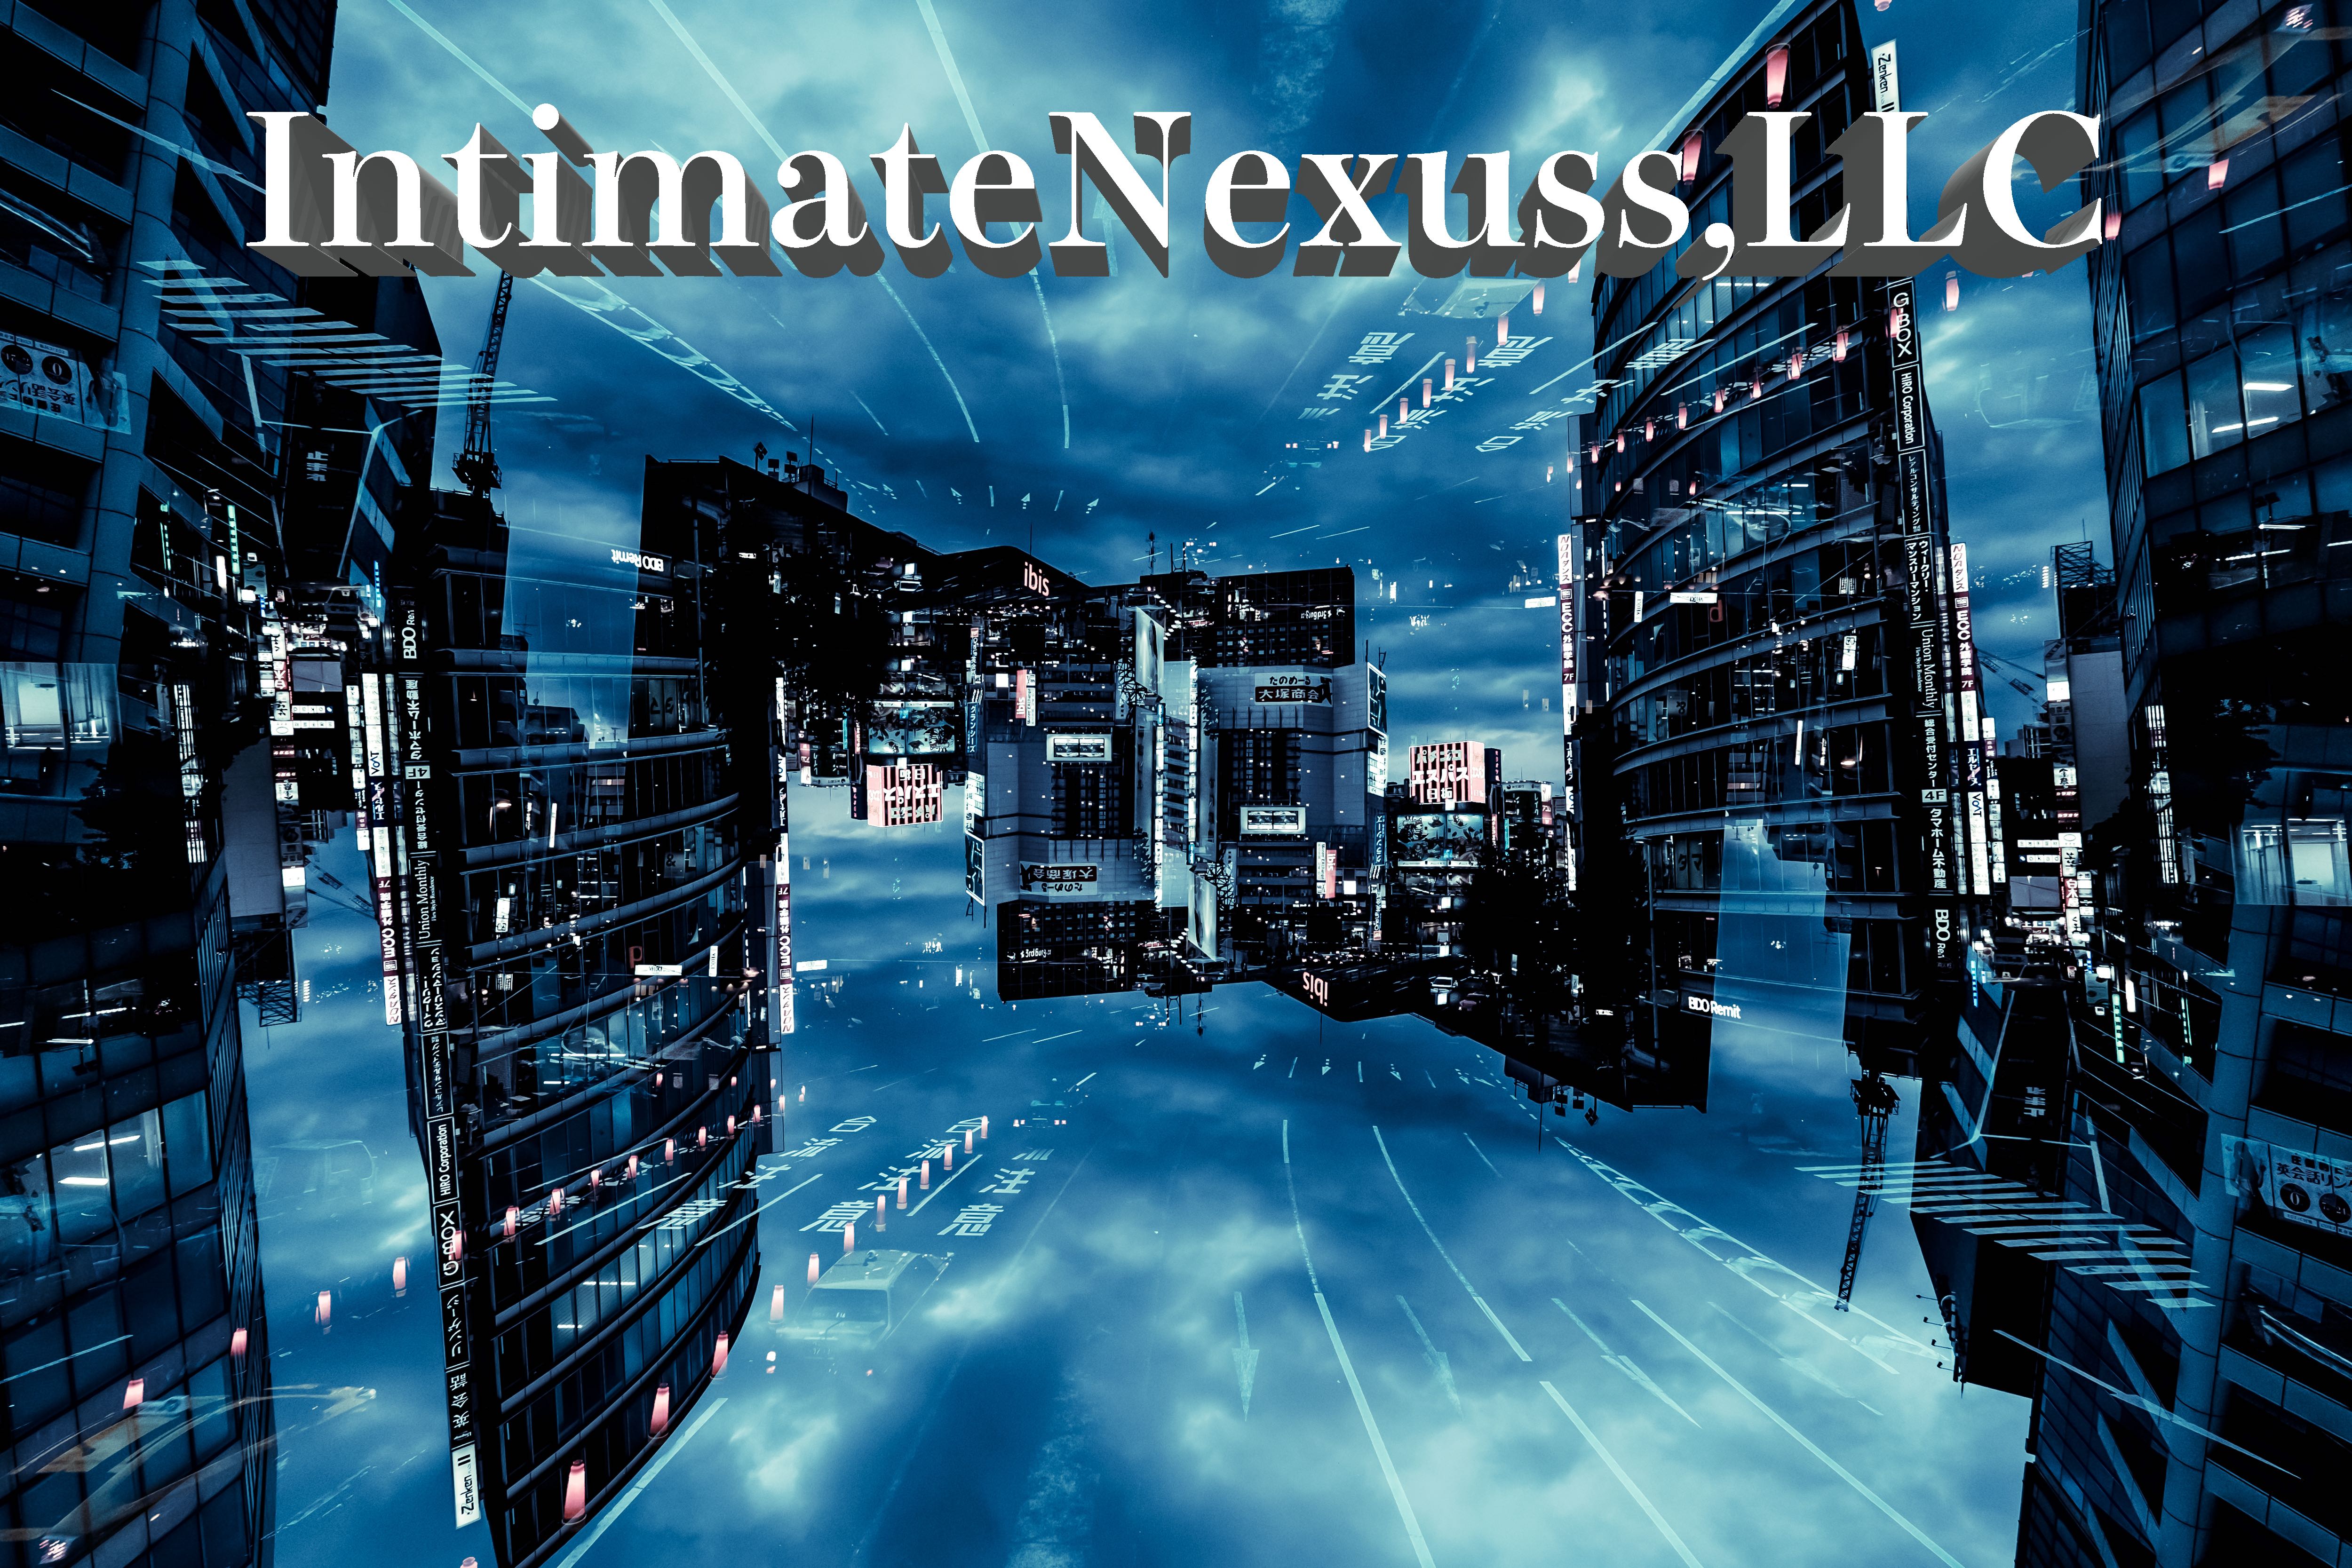 IntimateNexus.LLC